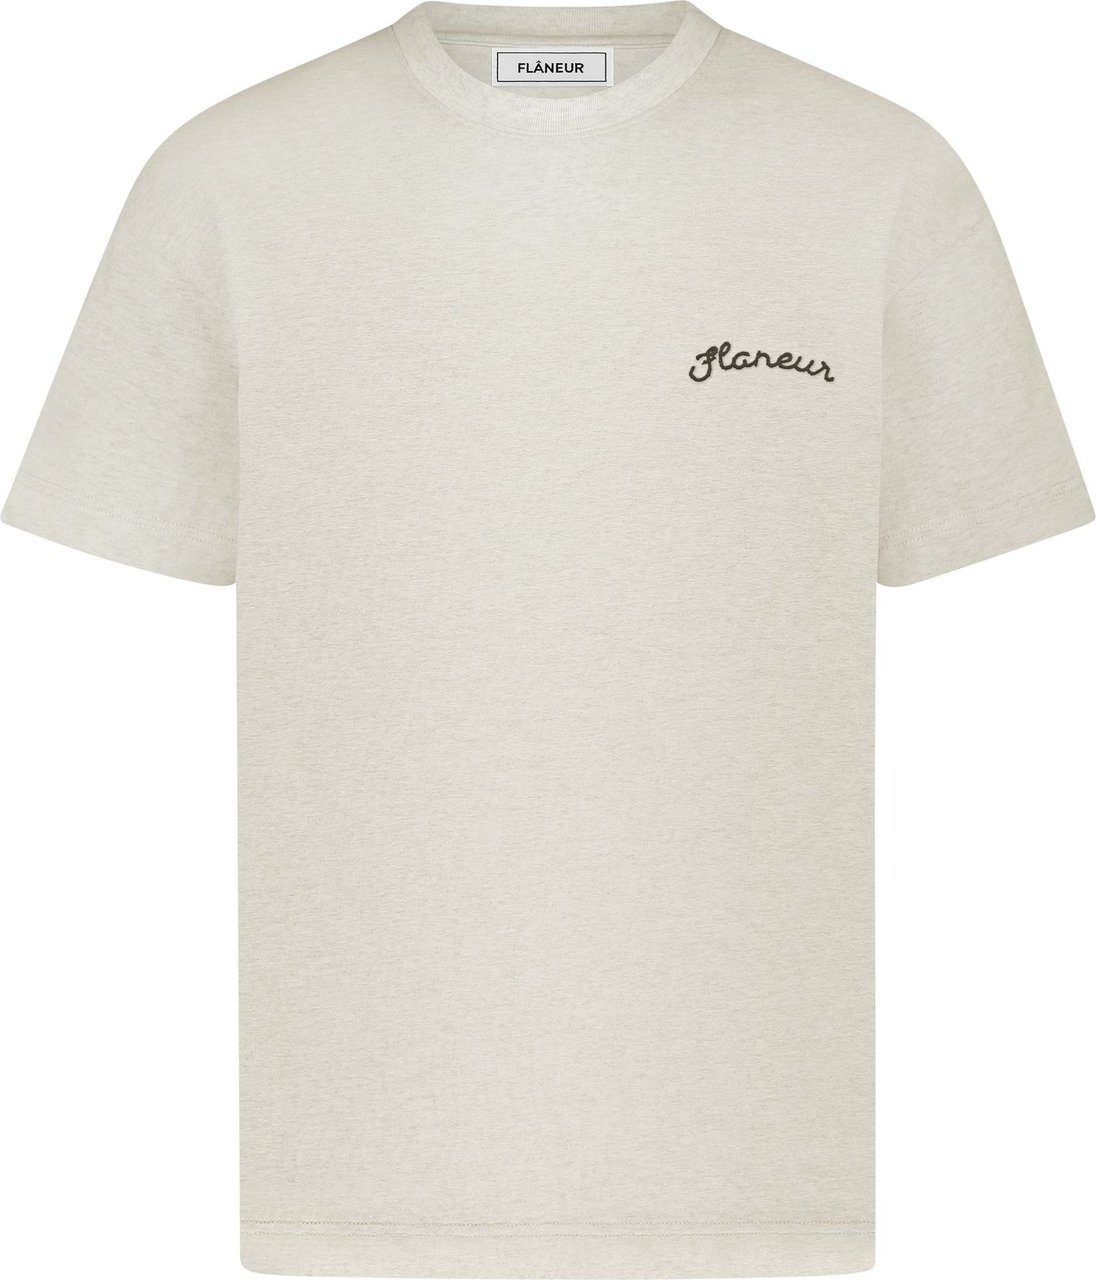 FLÂNEUR Signature T-Shirt Heather Cool Grey Grijs